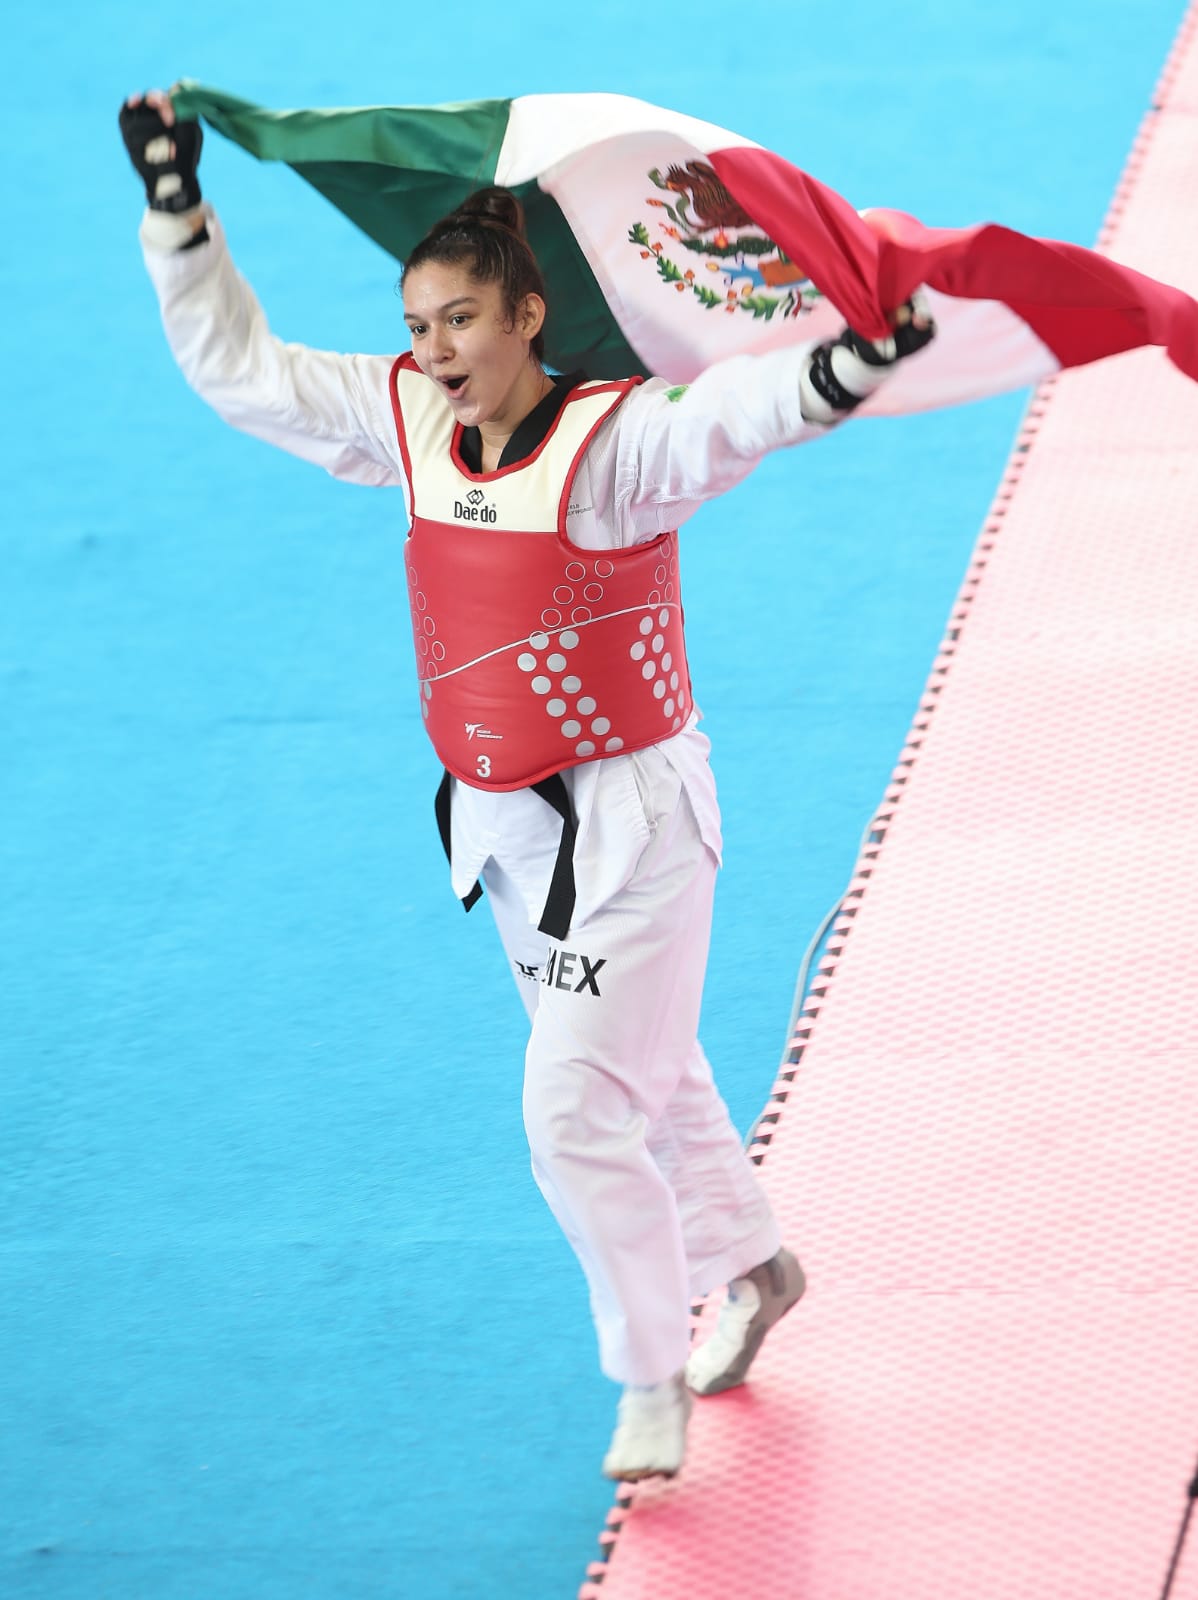 /cms/uploads/image/file/704642/Leslie_Soltero__seleccionada_nacional_de_taekwondo.jpeg